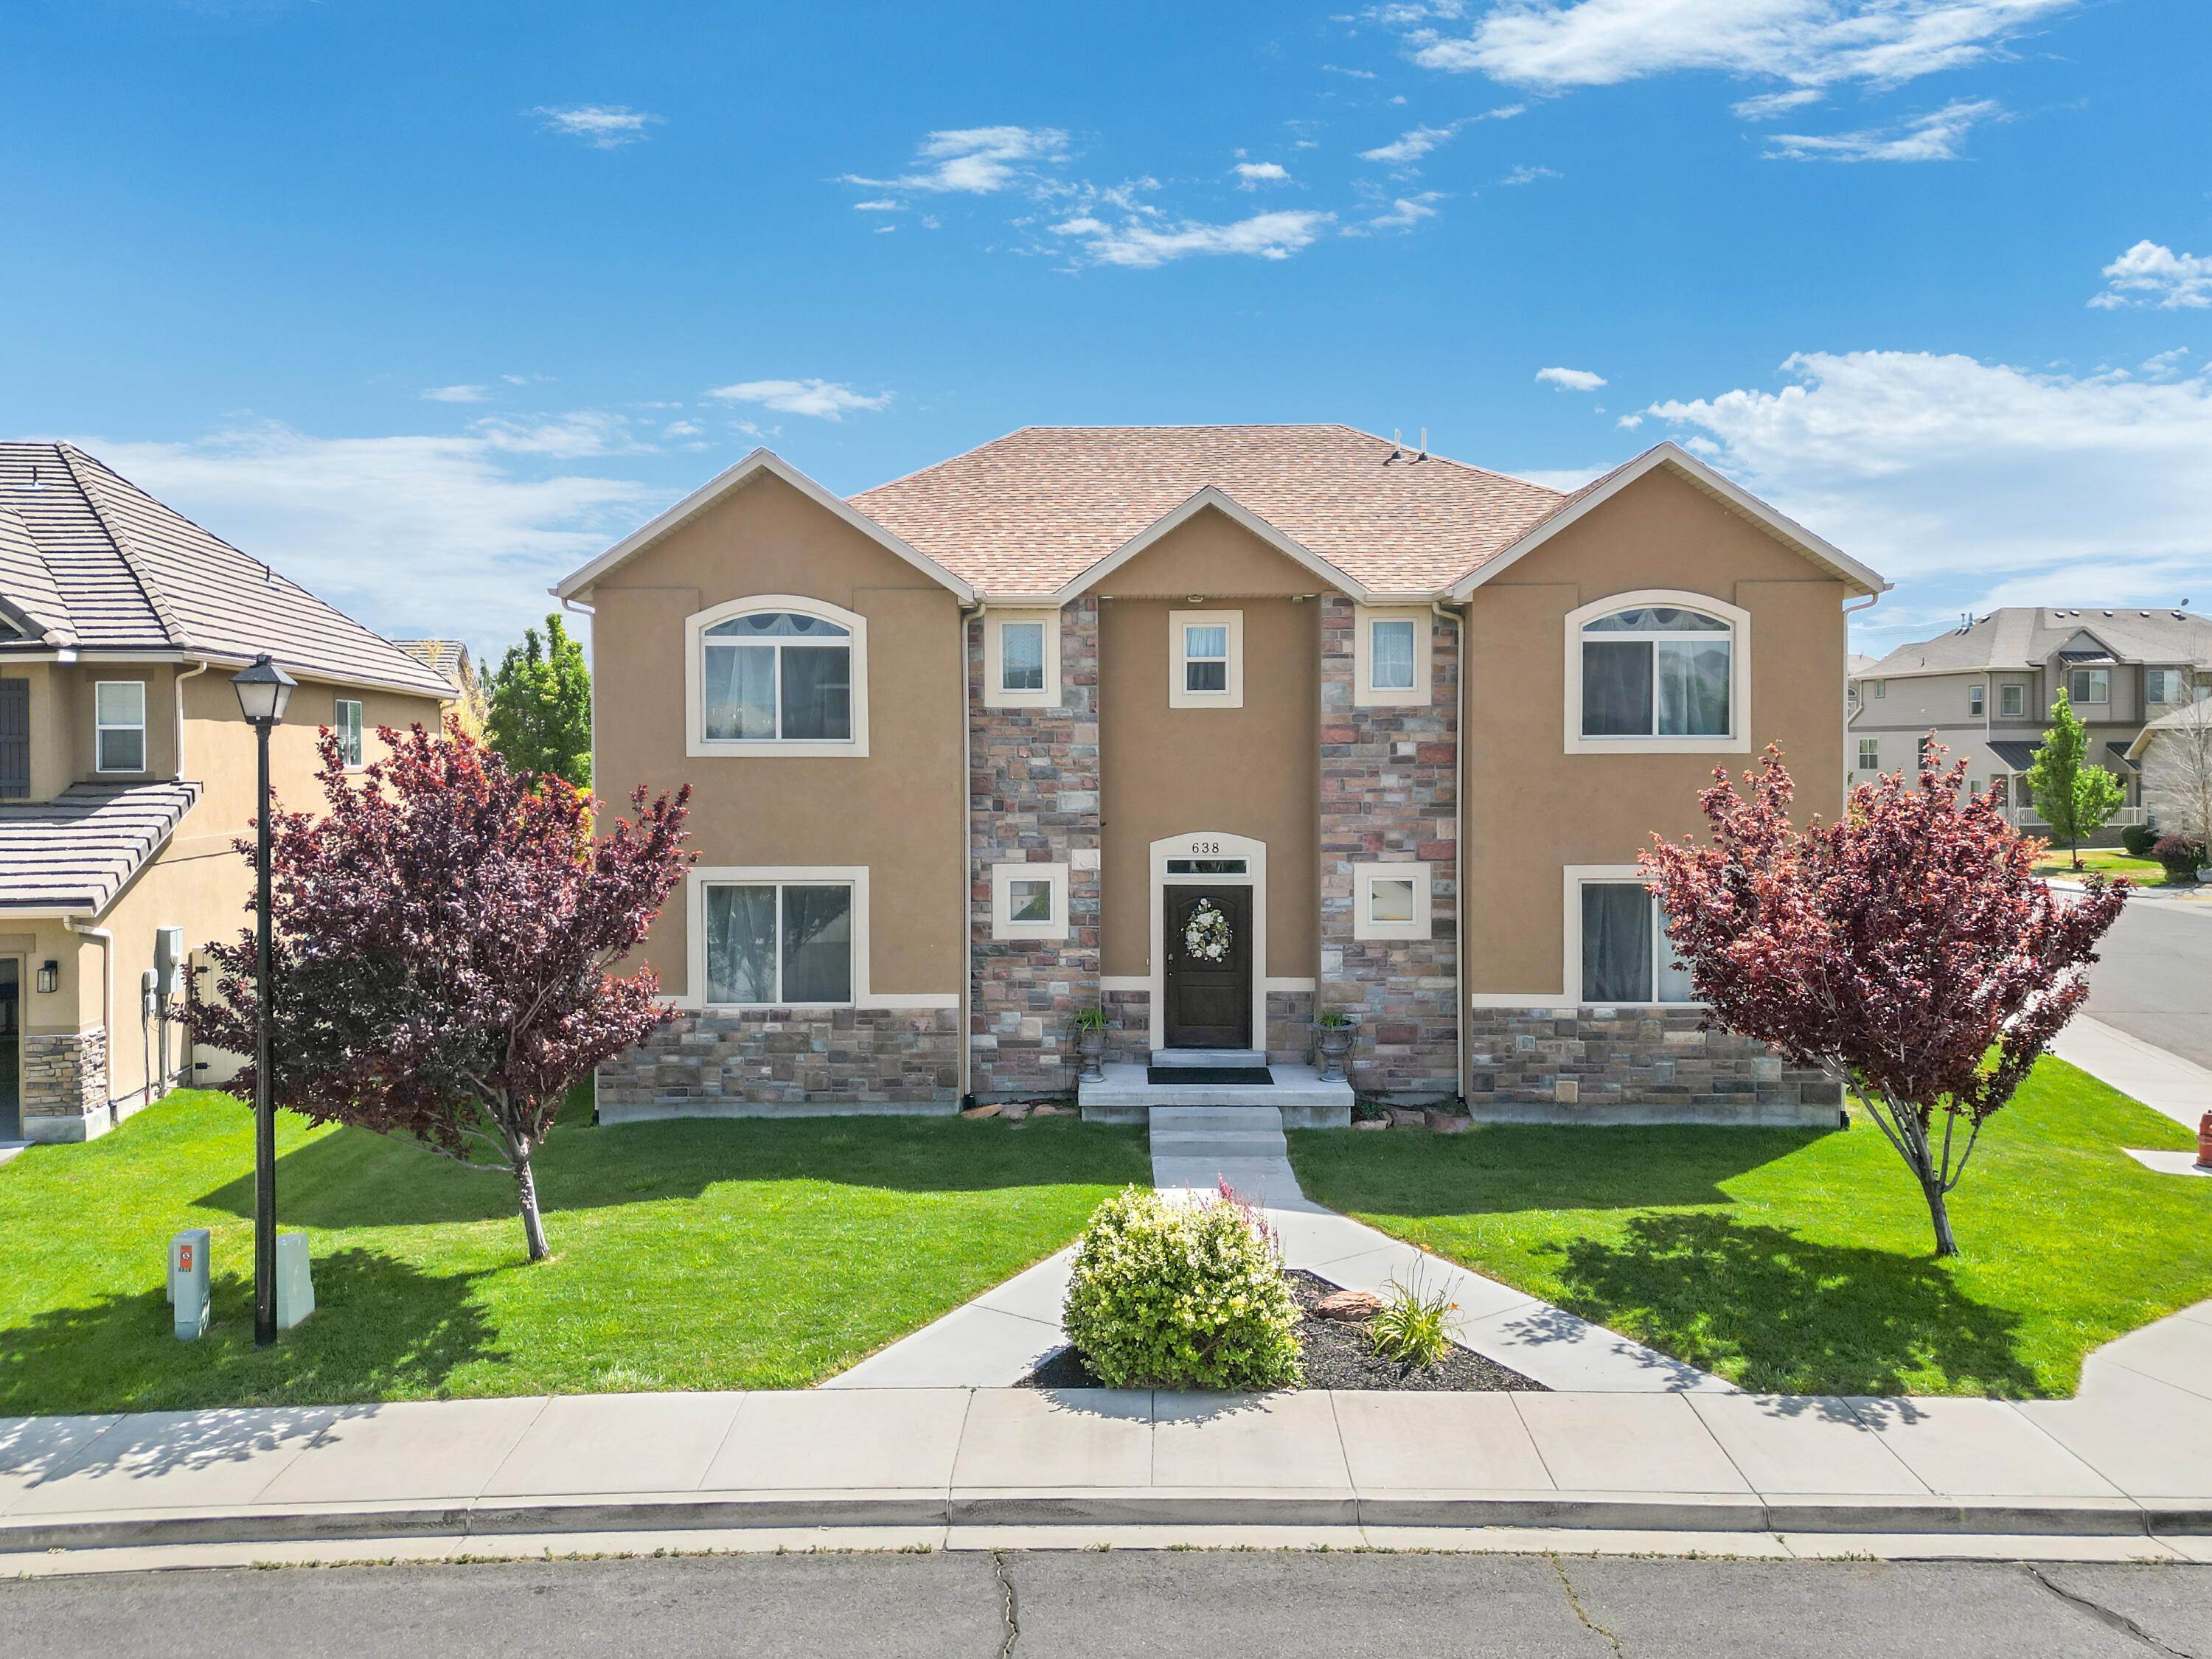 Single Family Homes for Sale at 638 1530 Lehi, Utah 84043 United States